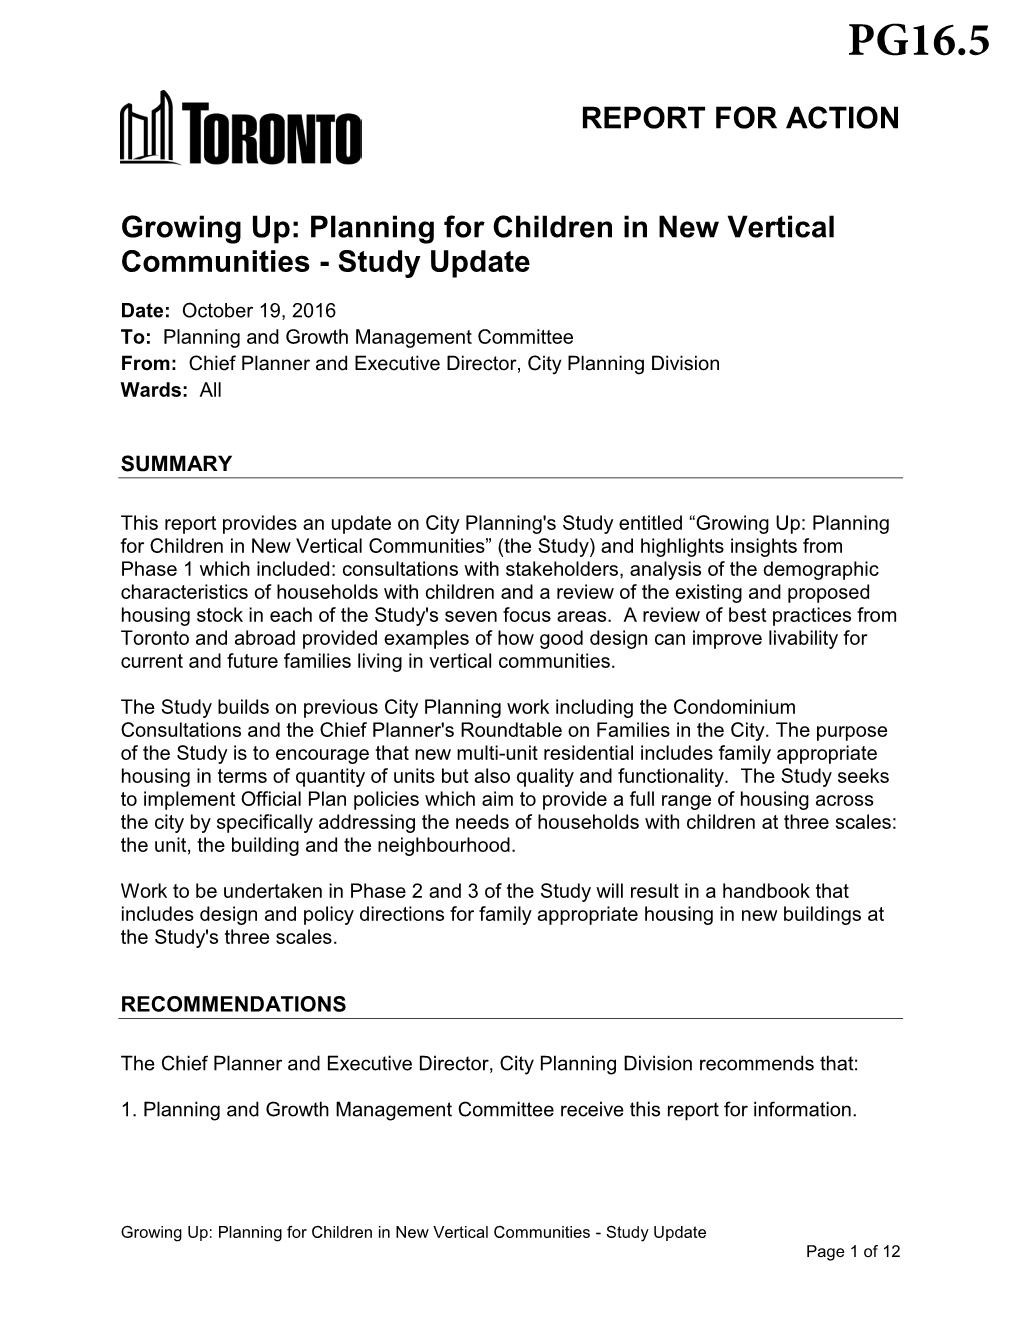 Planning for Children in New Vertical Communities - Study Update